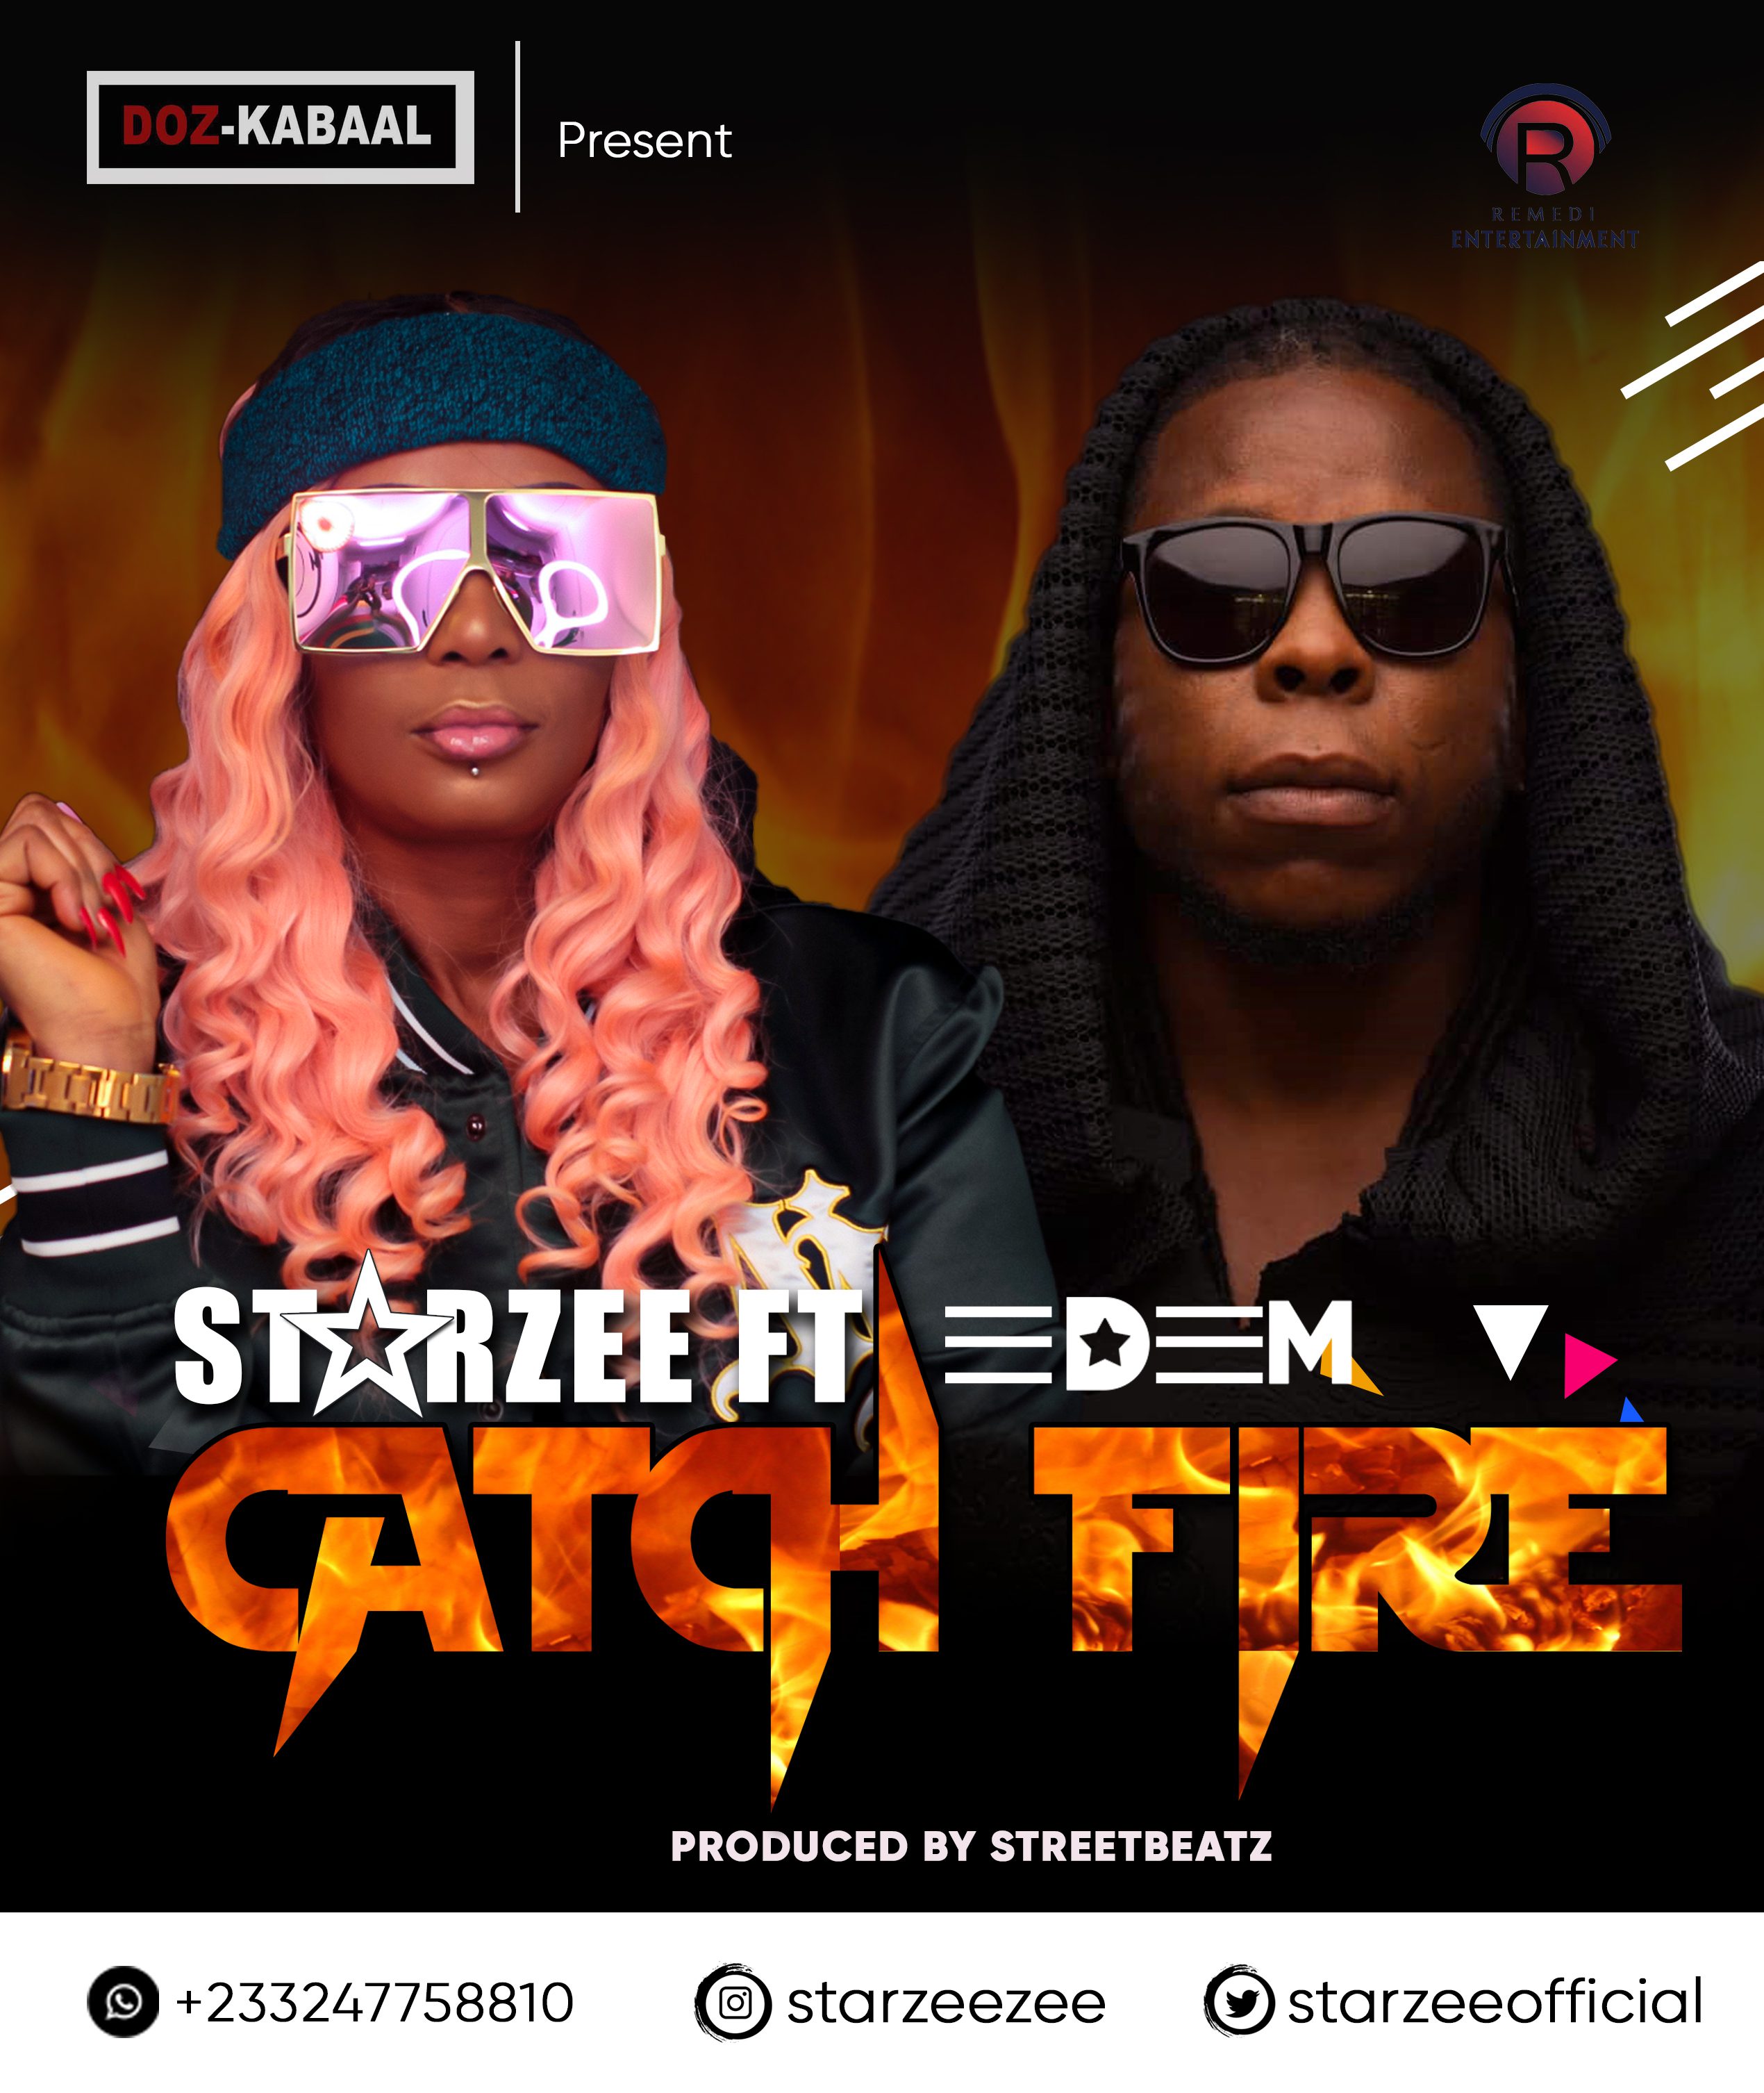 Star Zee ft. Edem – Catch Fire (Prod. By Streetbeatz)